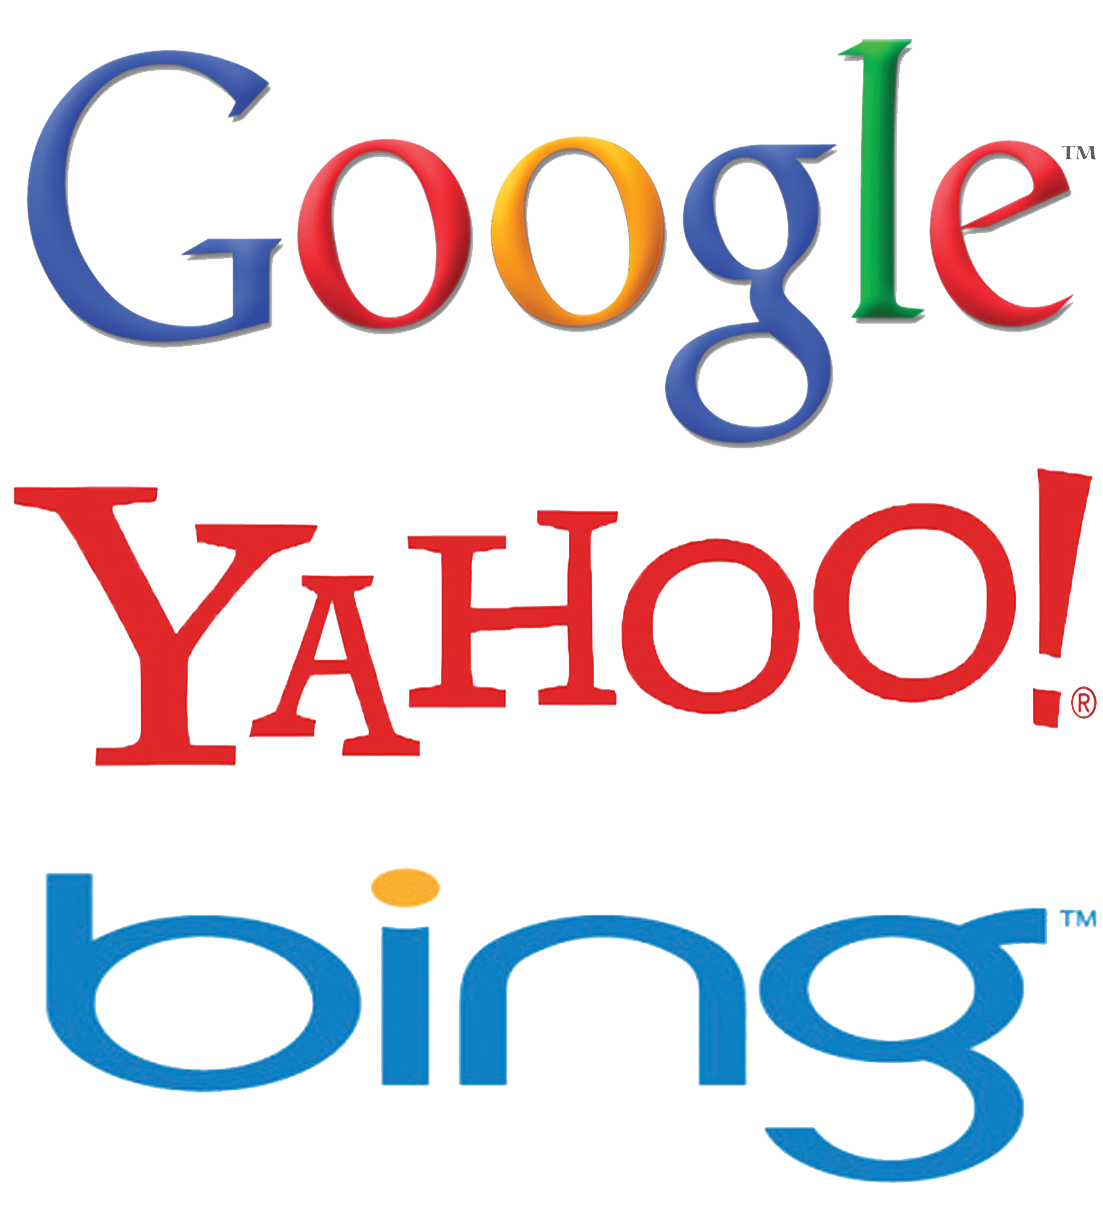 Search-Engine-Marketing-Google-Yahoo-Bing